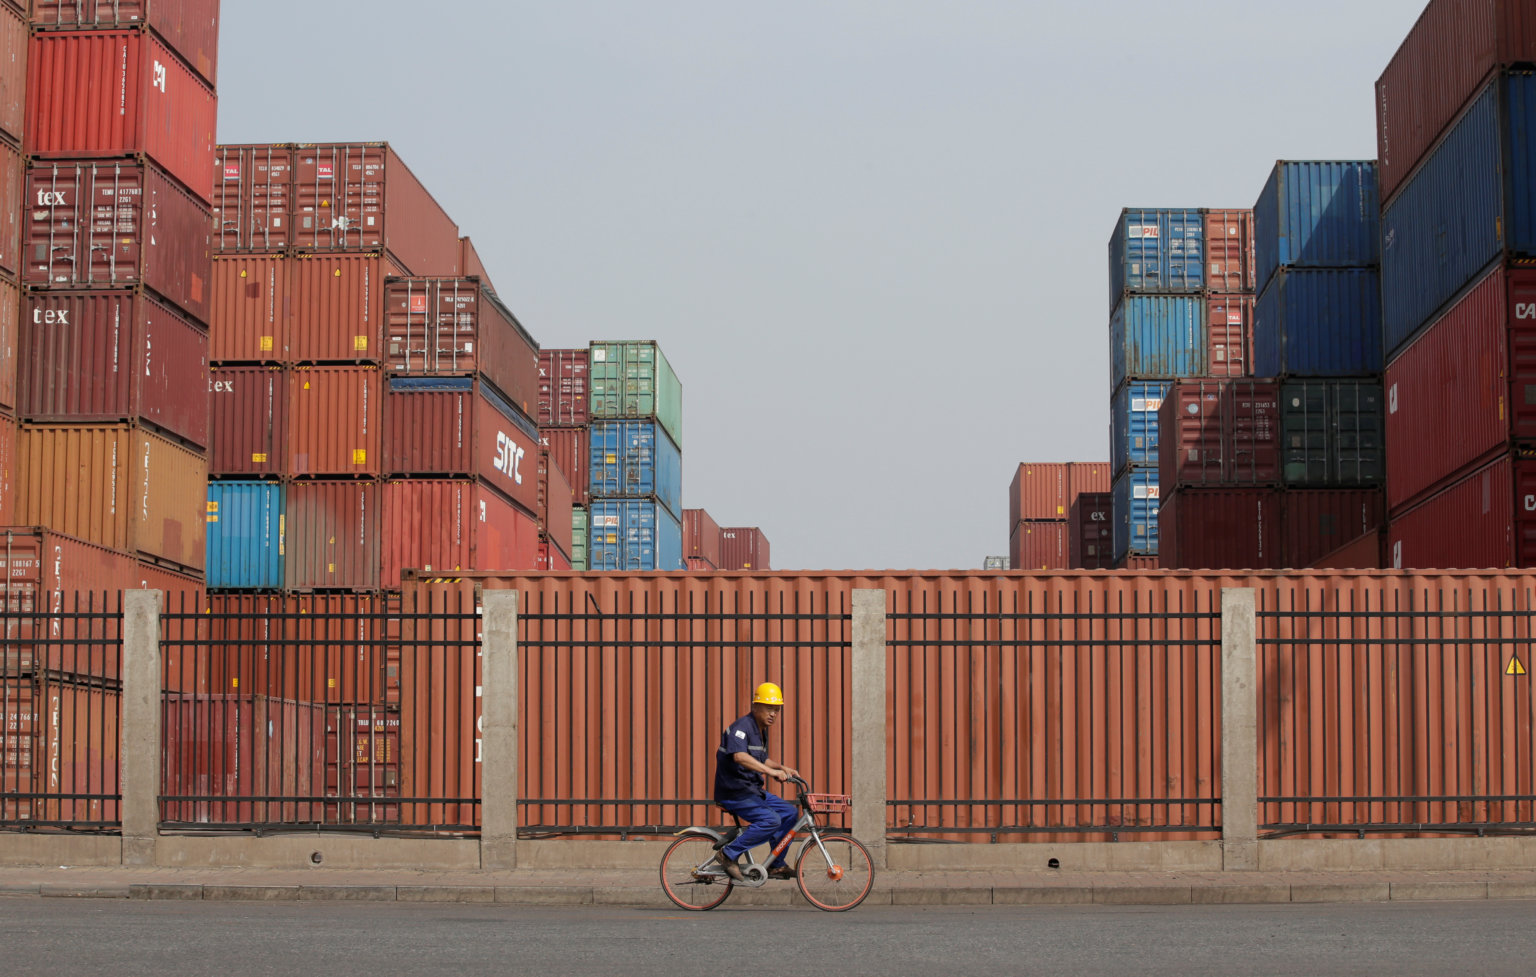 Taking aim at US, China says provoking trade disputes is 